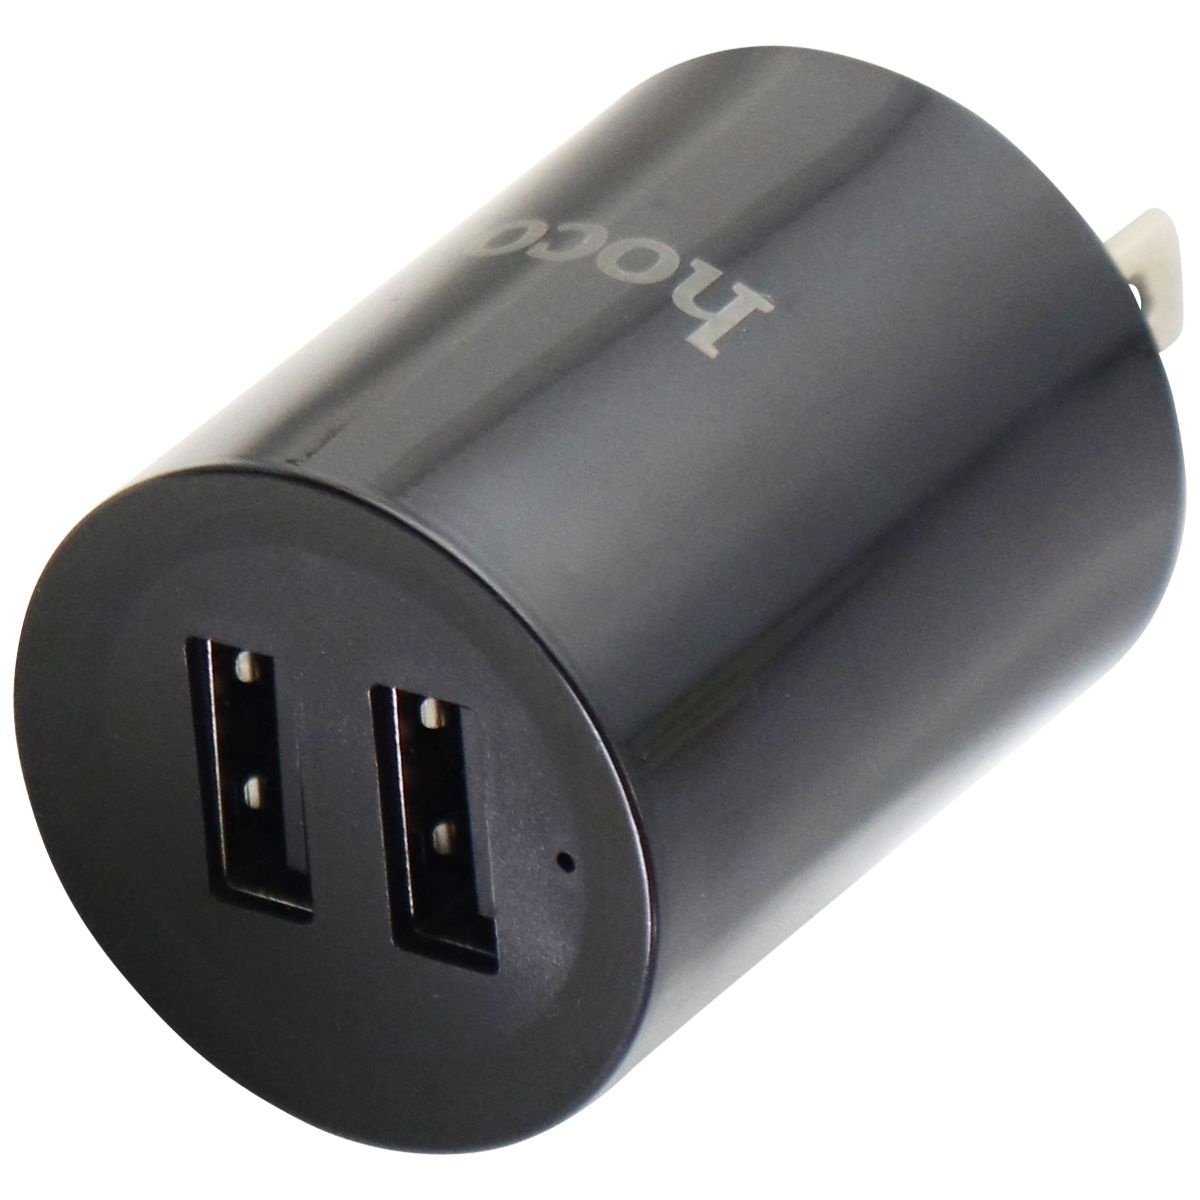 HoCo. (2.4-Amp) C14 Elite Dual USB Wall Charger - Black